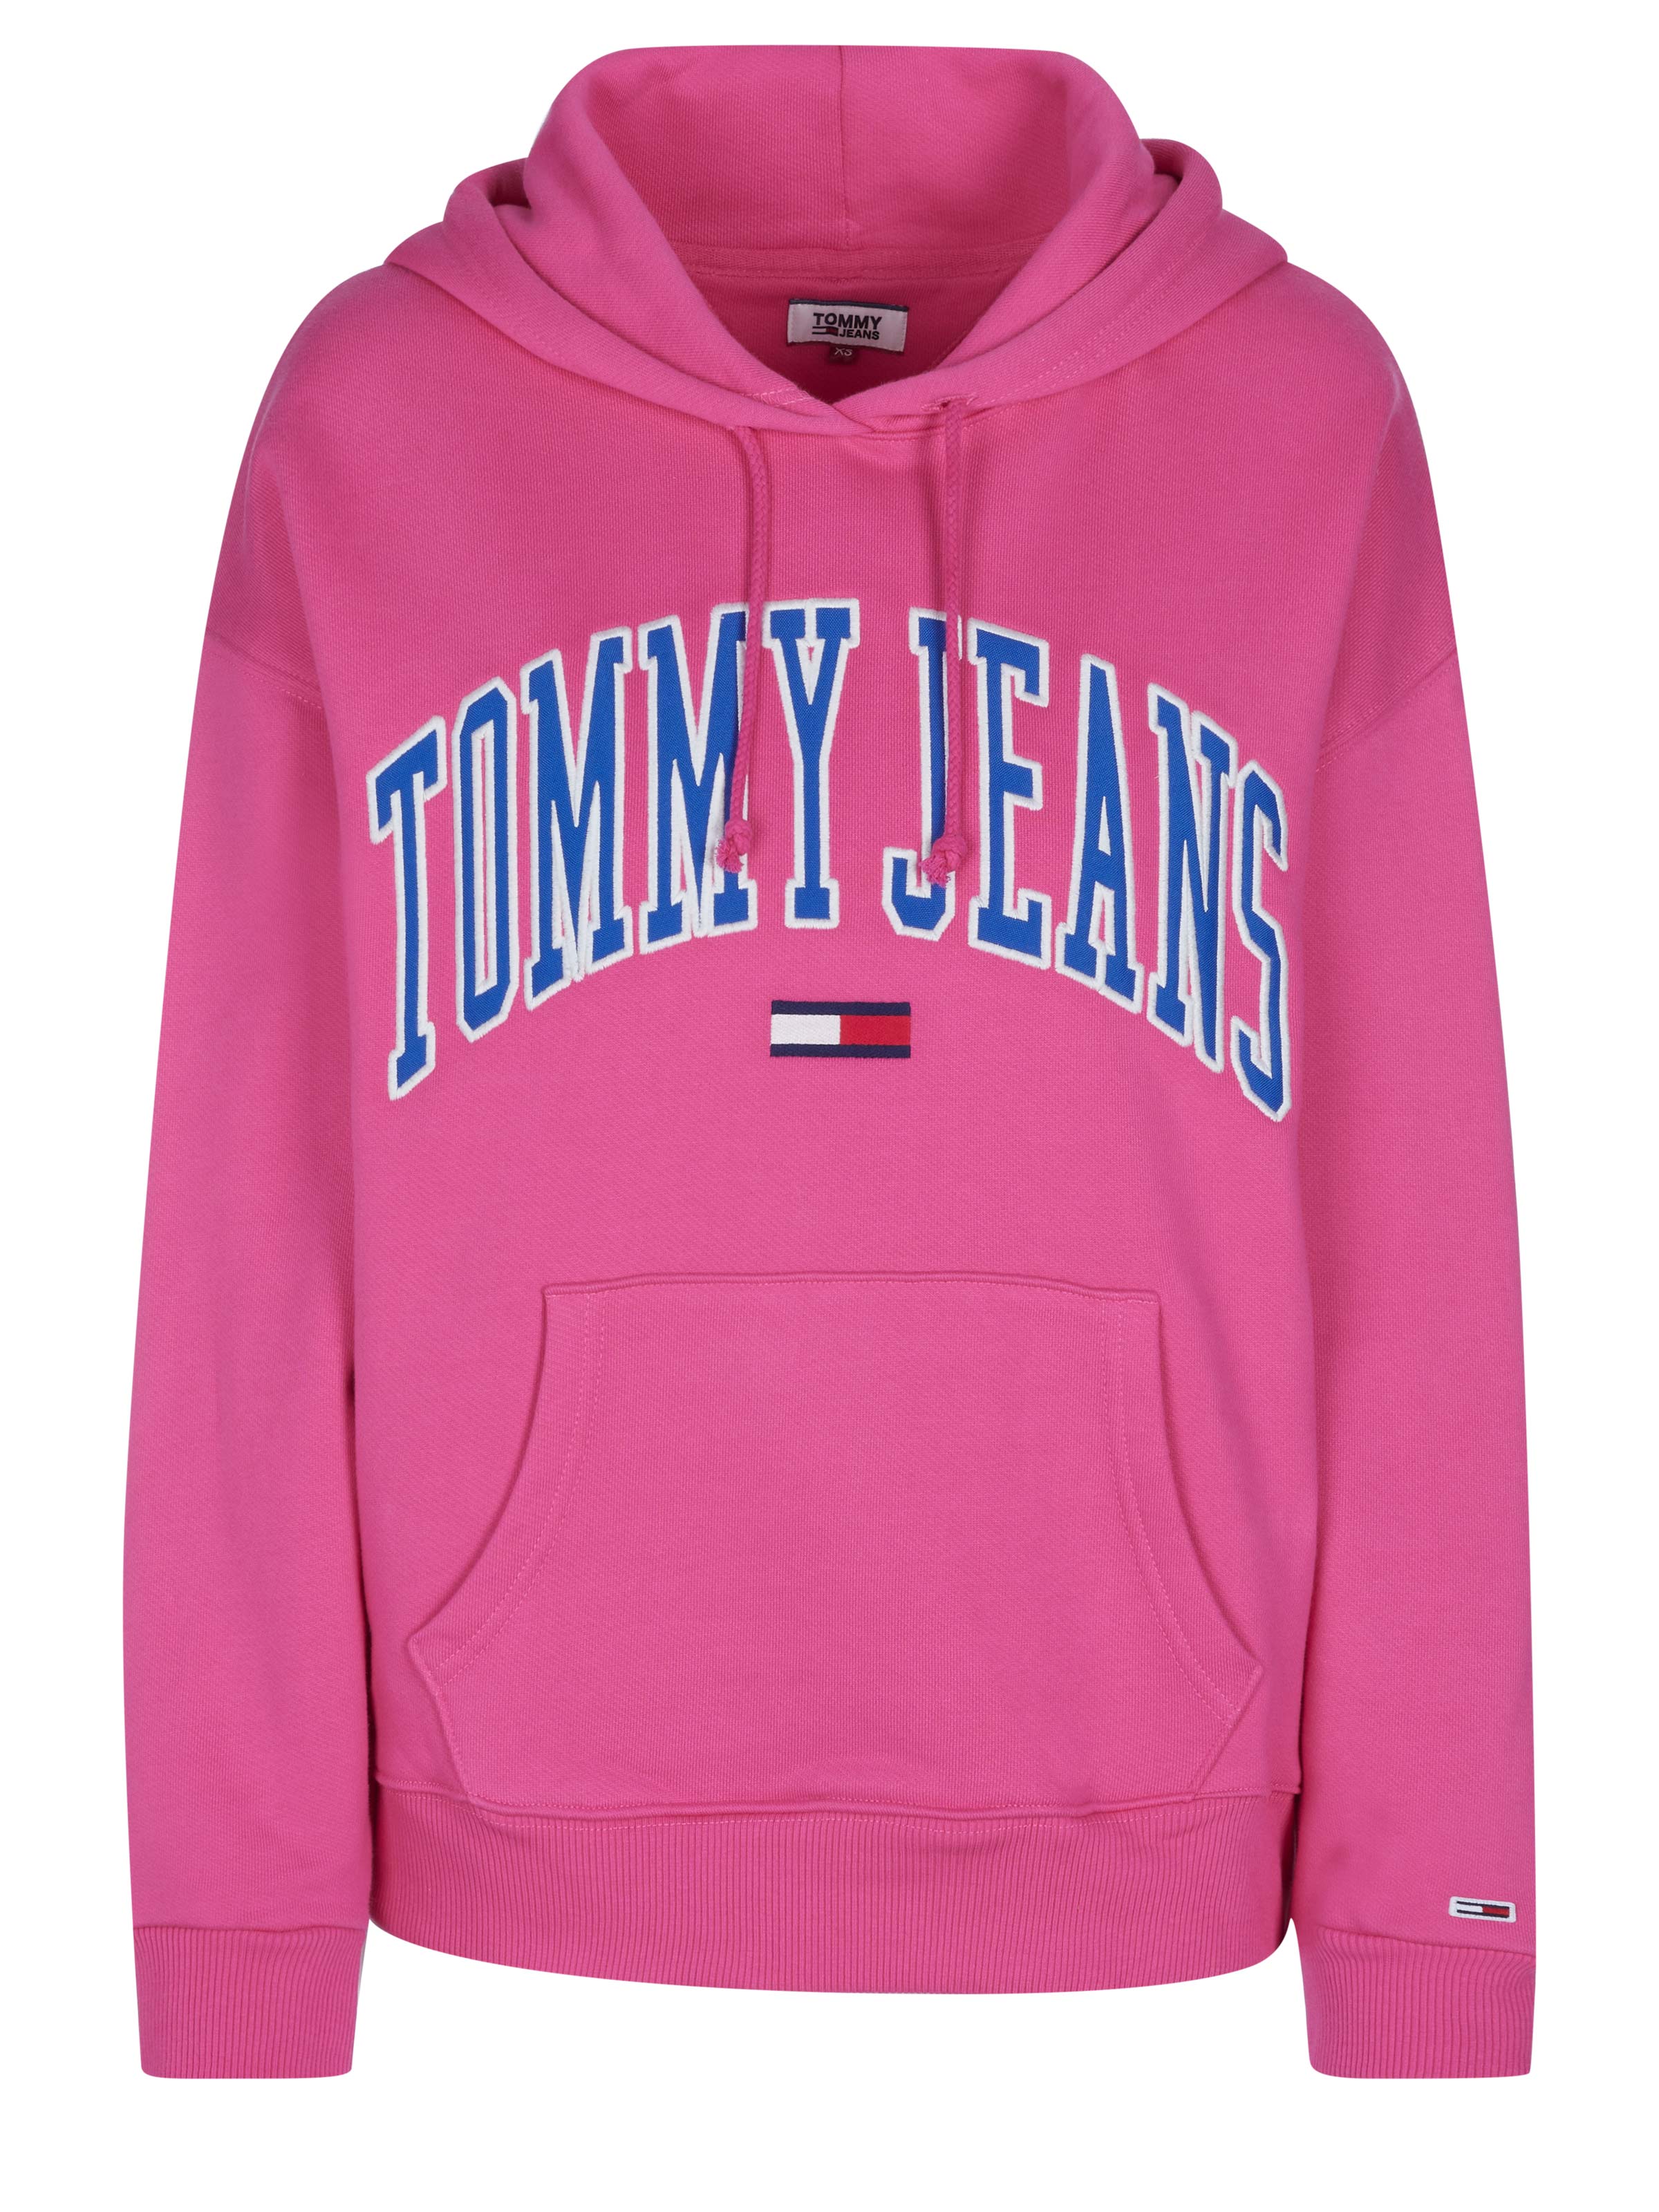 Tommy Hilfiger Jeans Pullover Pink SALE Fashionesta | on